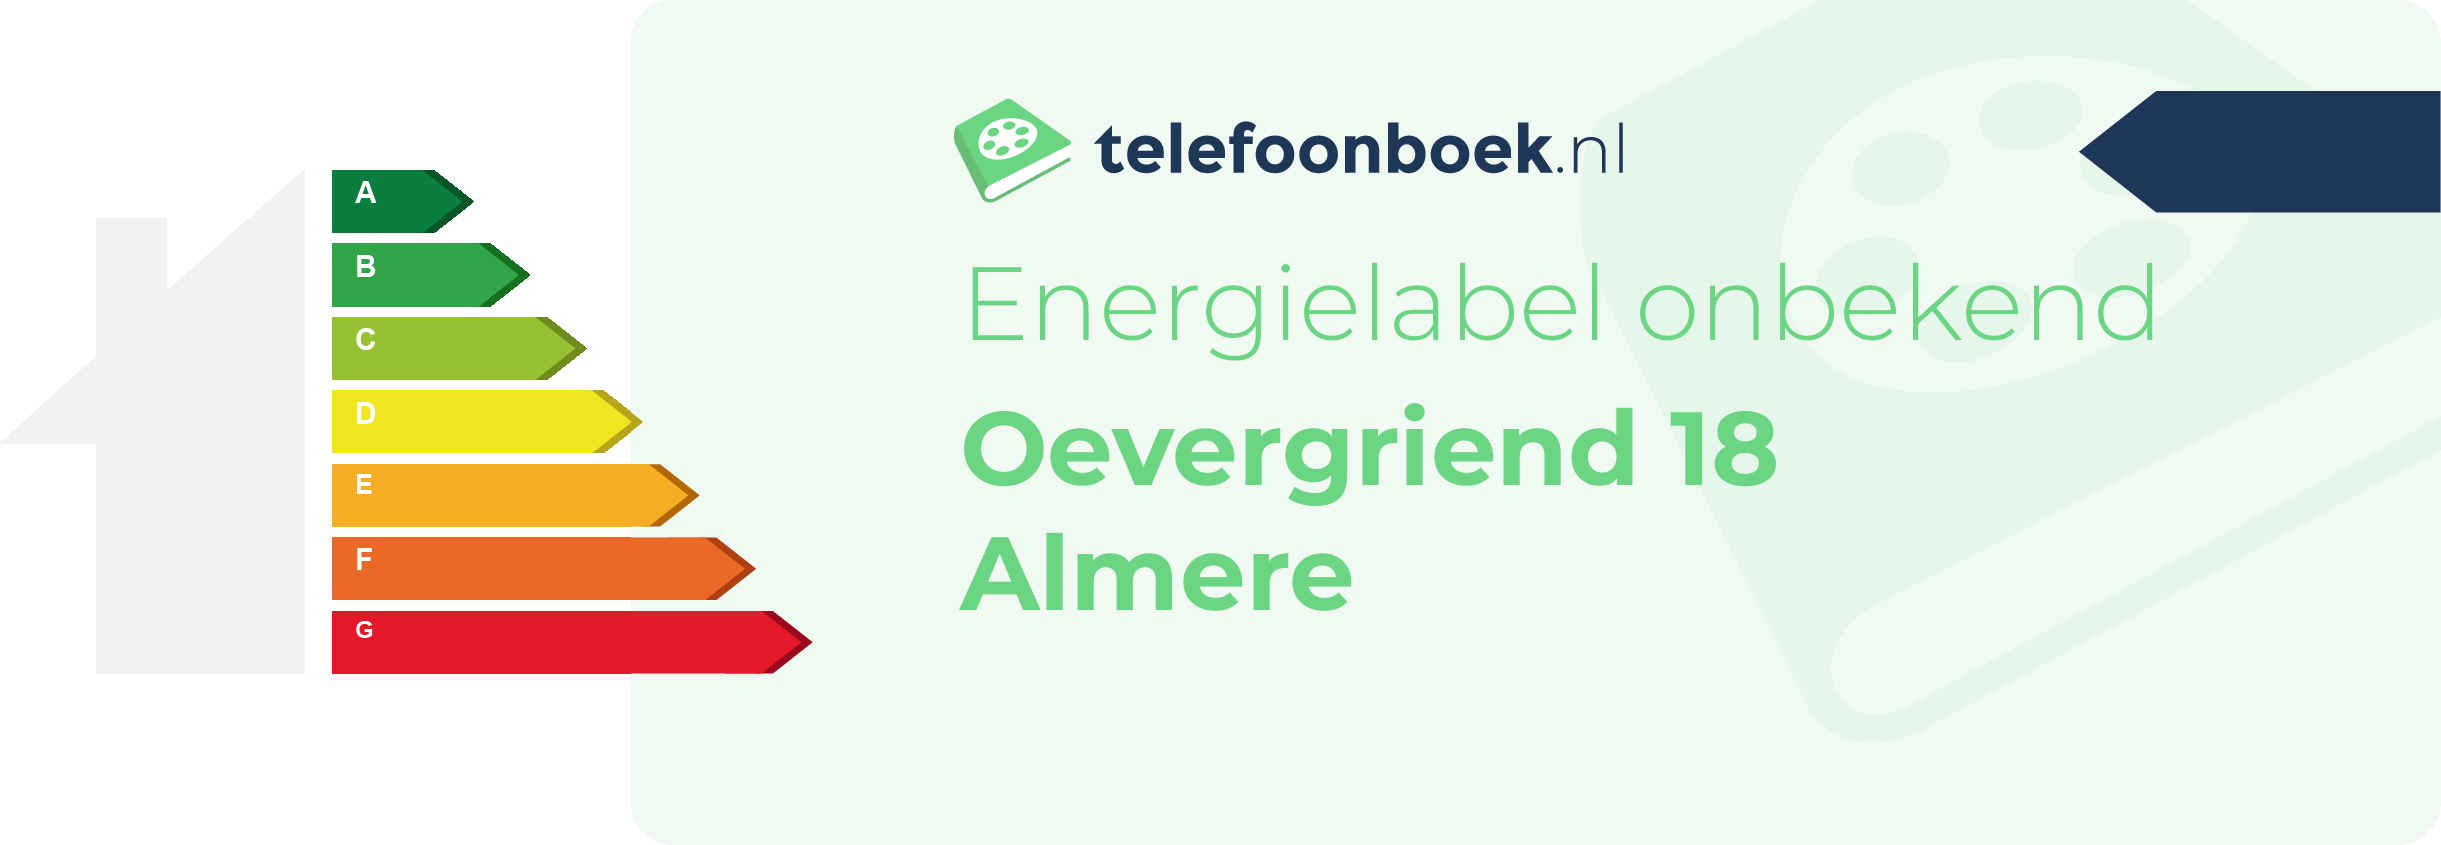 Energielabel Oevergriend 18 Almere